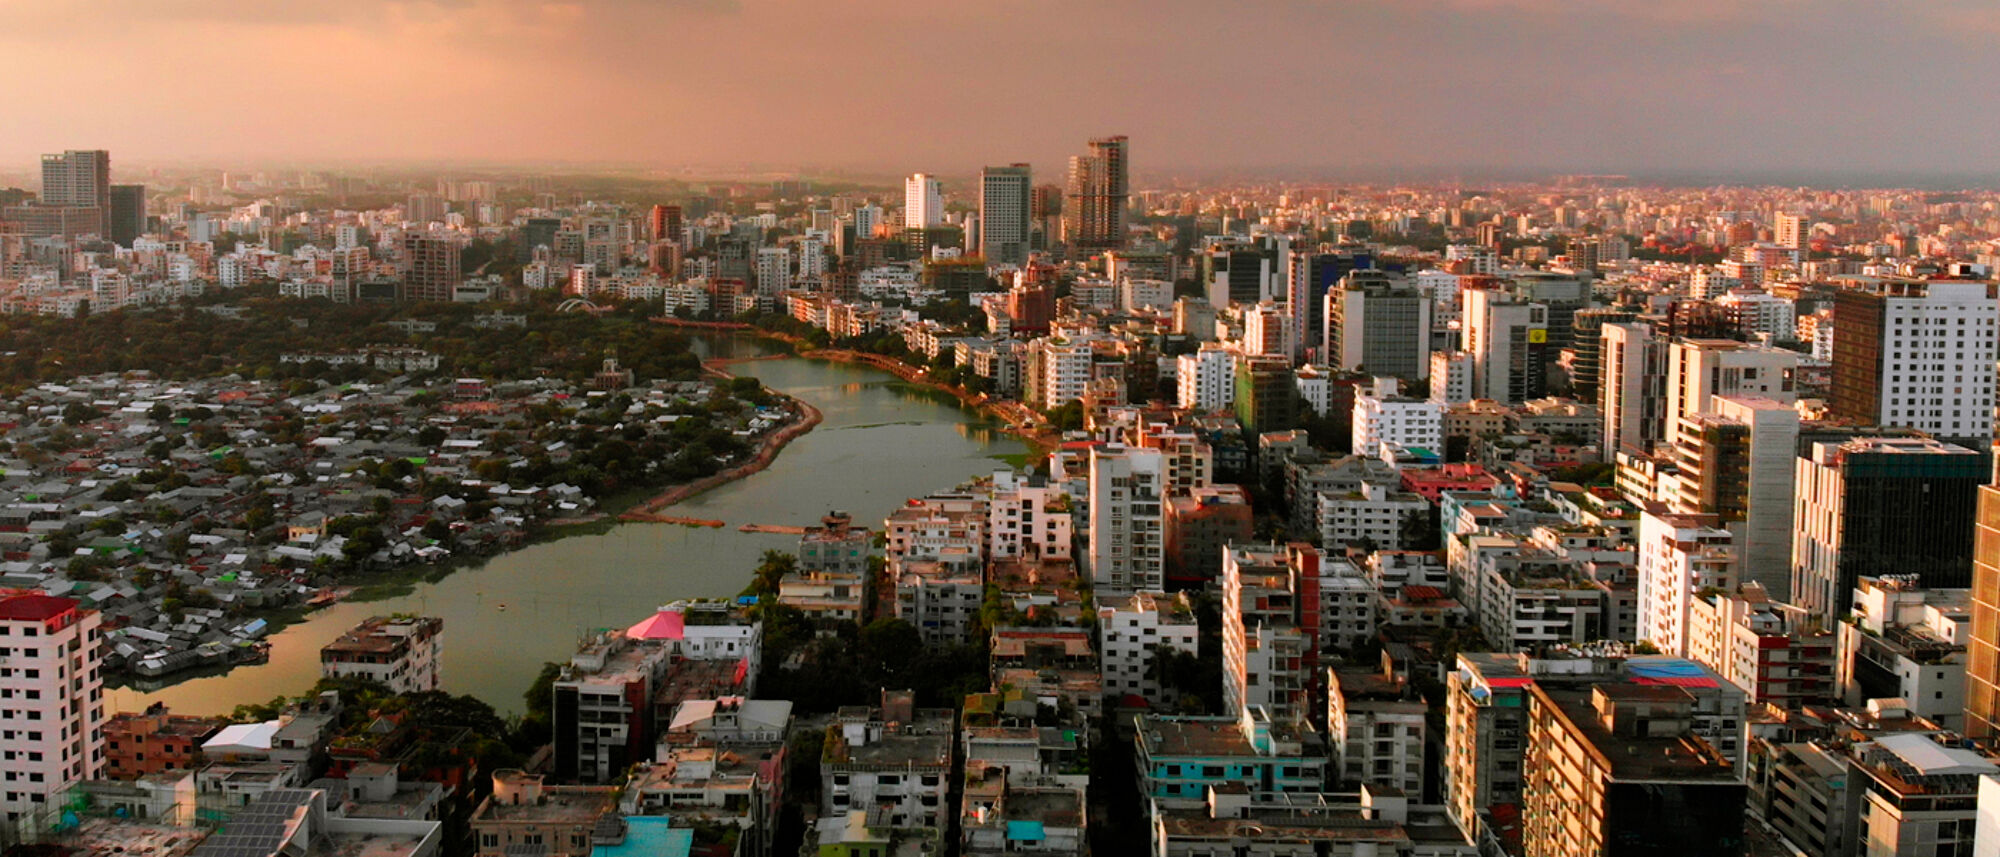 Dhaka, the capital of Bangladesh (photo: Shutterstock)